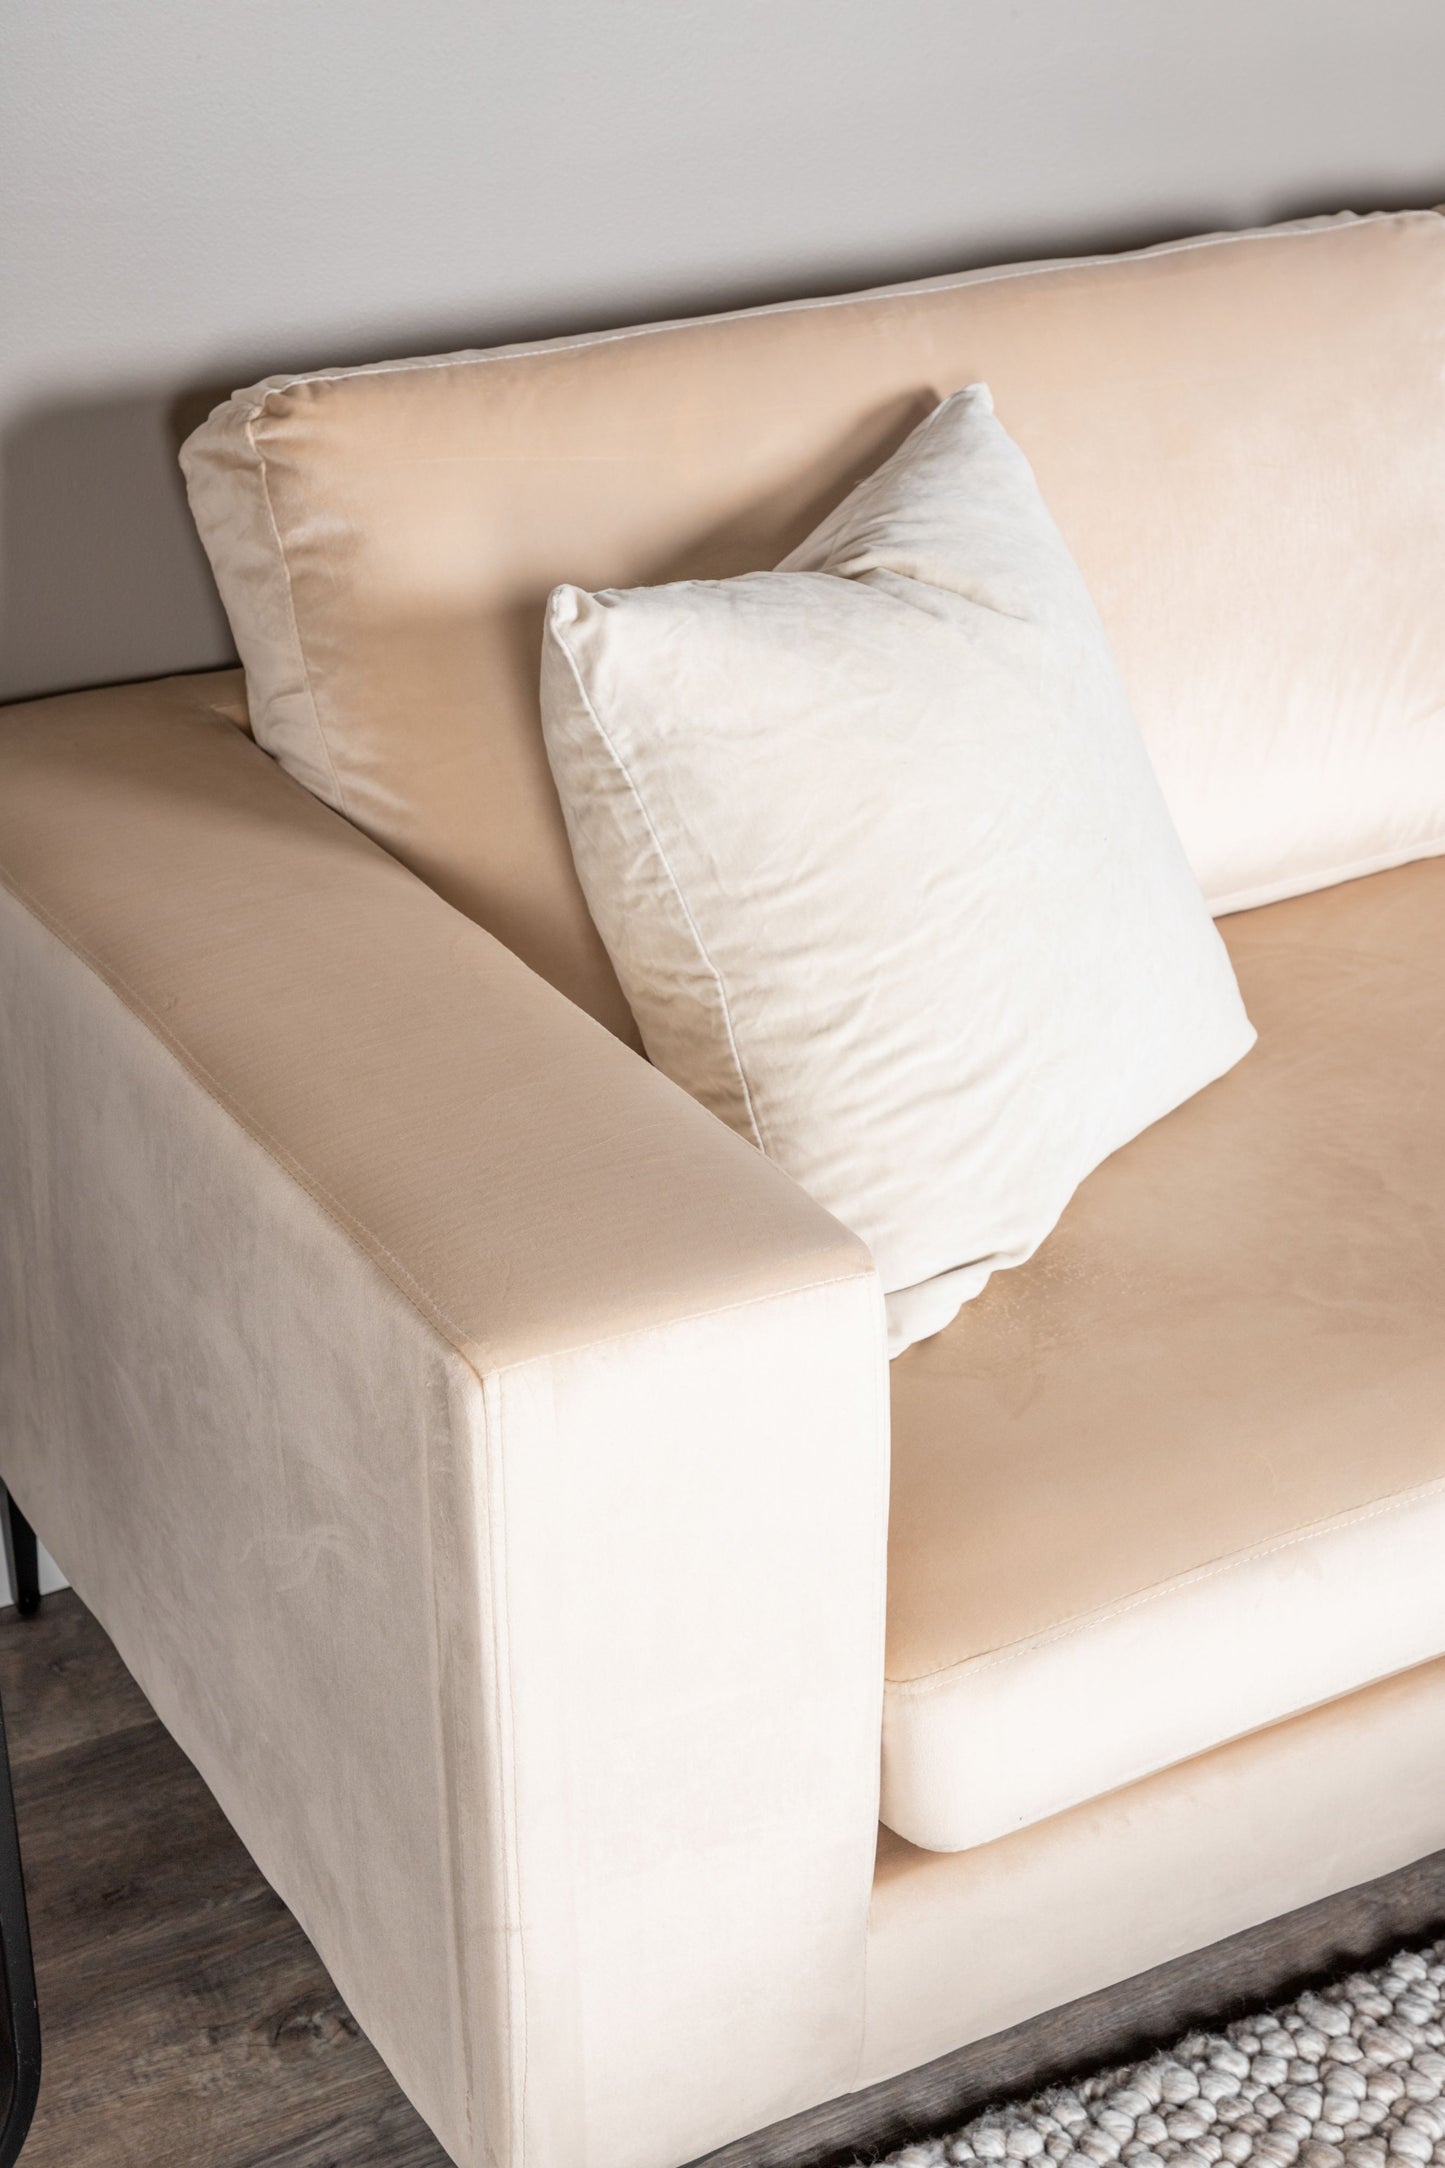 Venture-Design | Bolero Sofa - 3-Sitzer - Beige Velours - Schwarze Beine